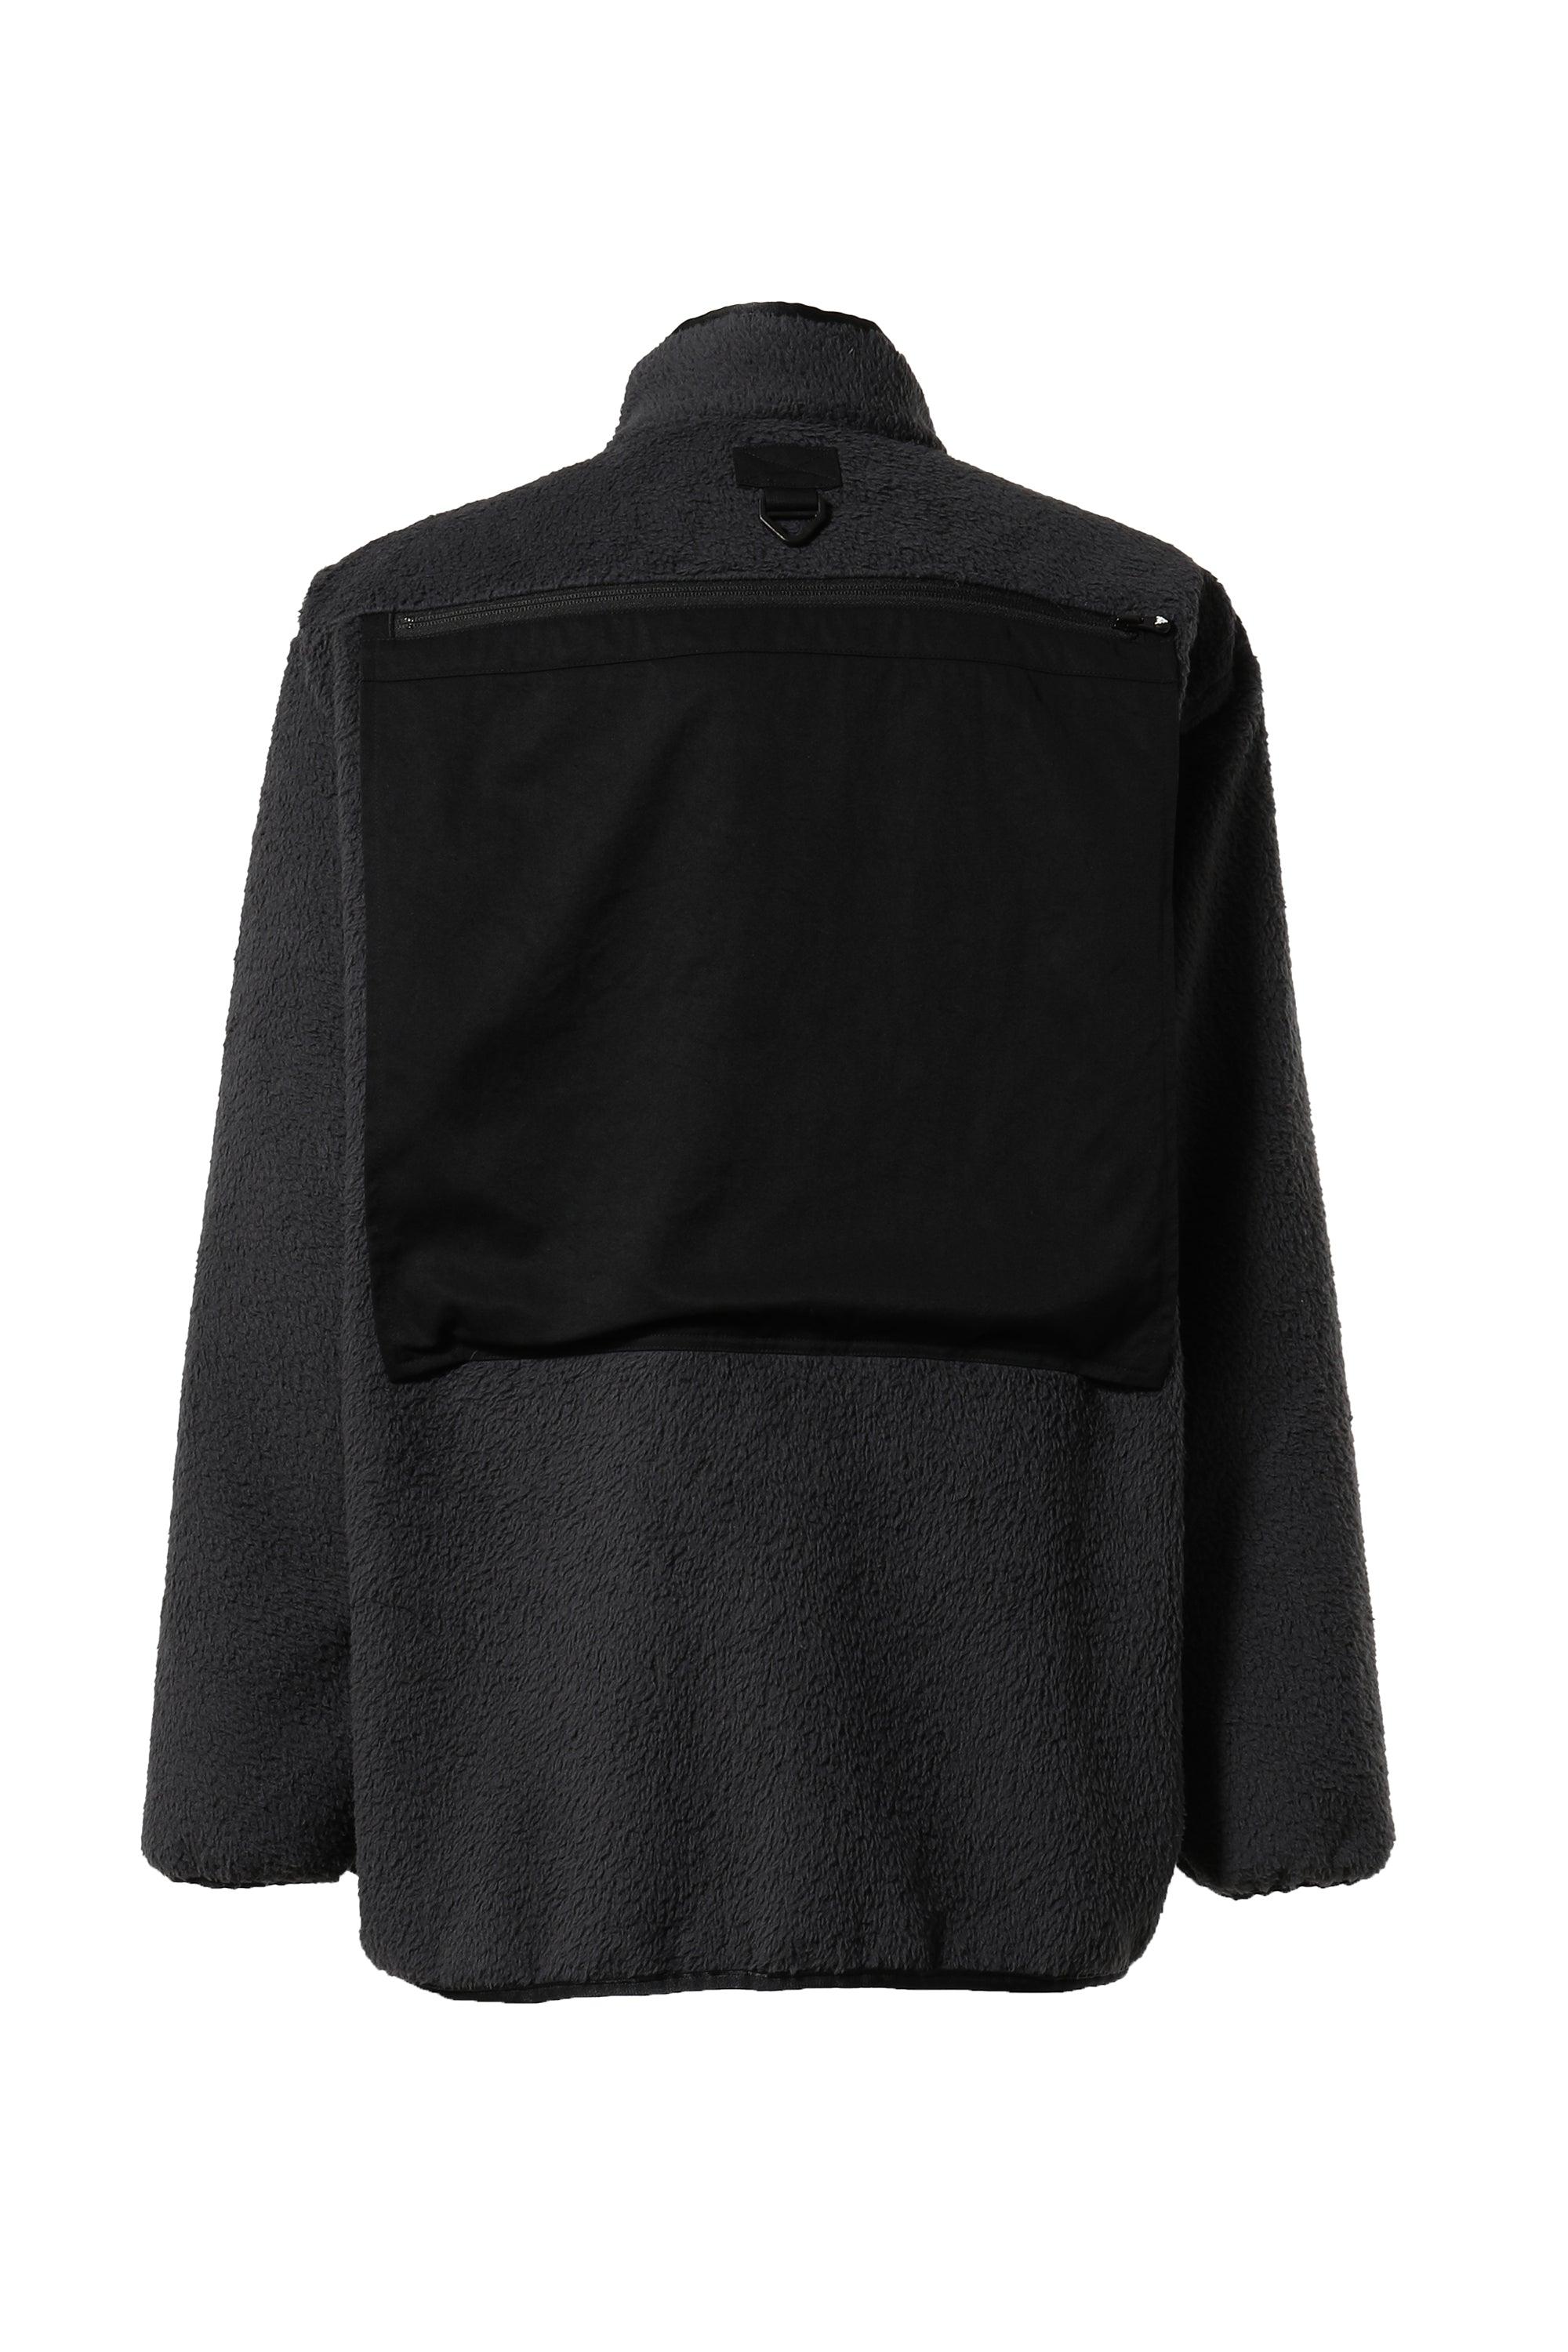 South2 West8 Tenkara Trout Pullover Jacket - Poly Fleece in Black